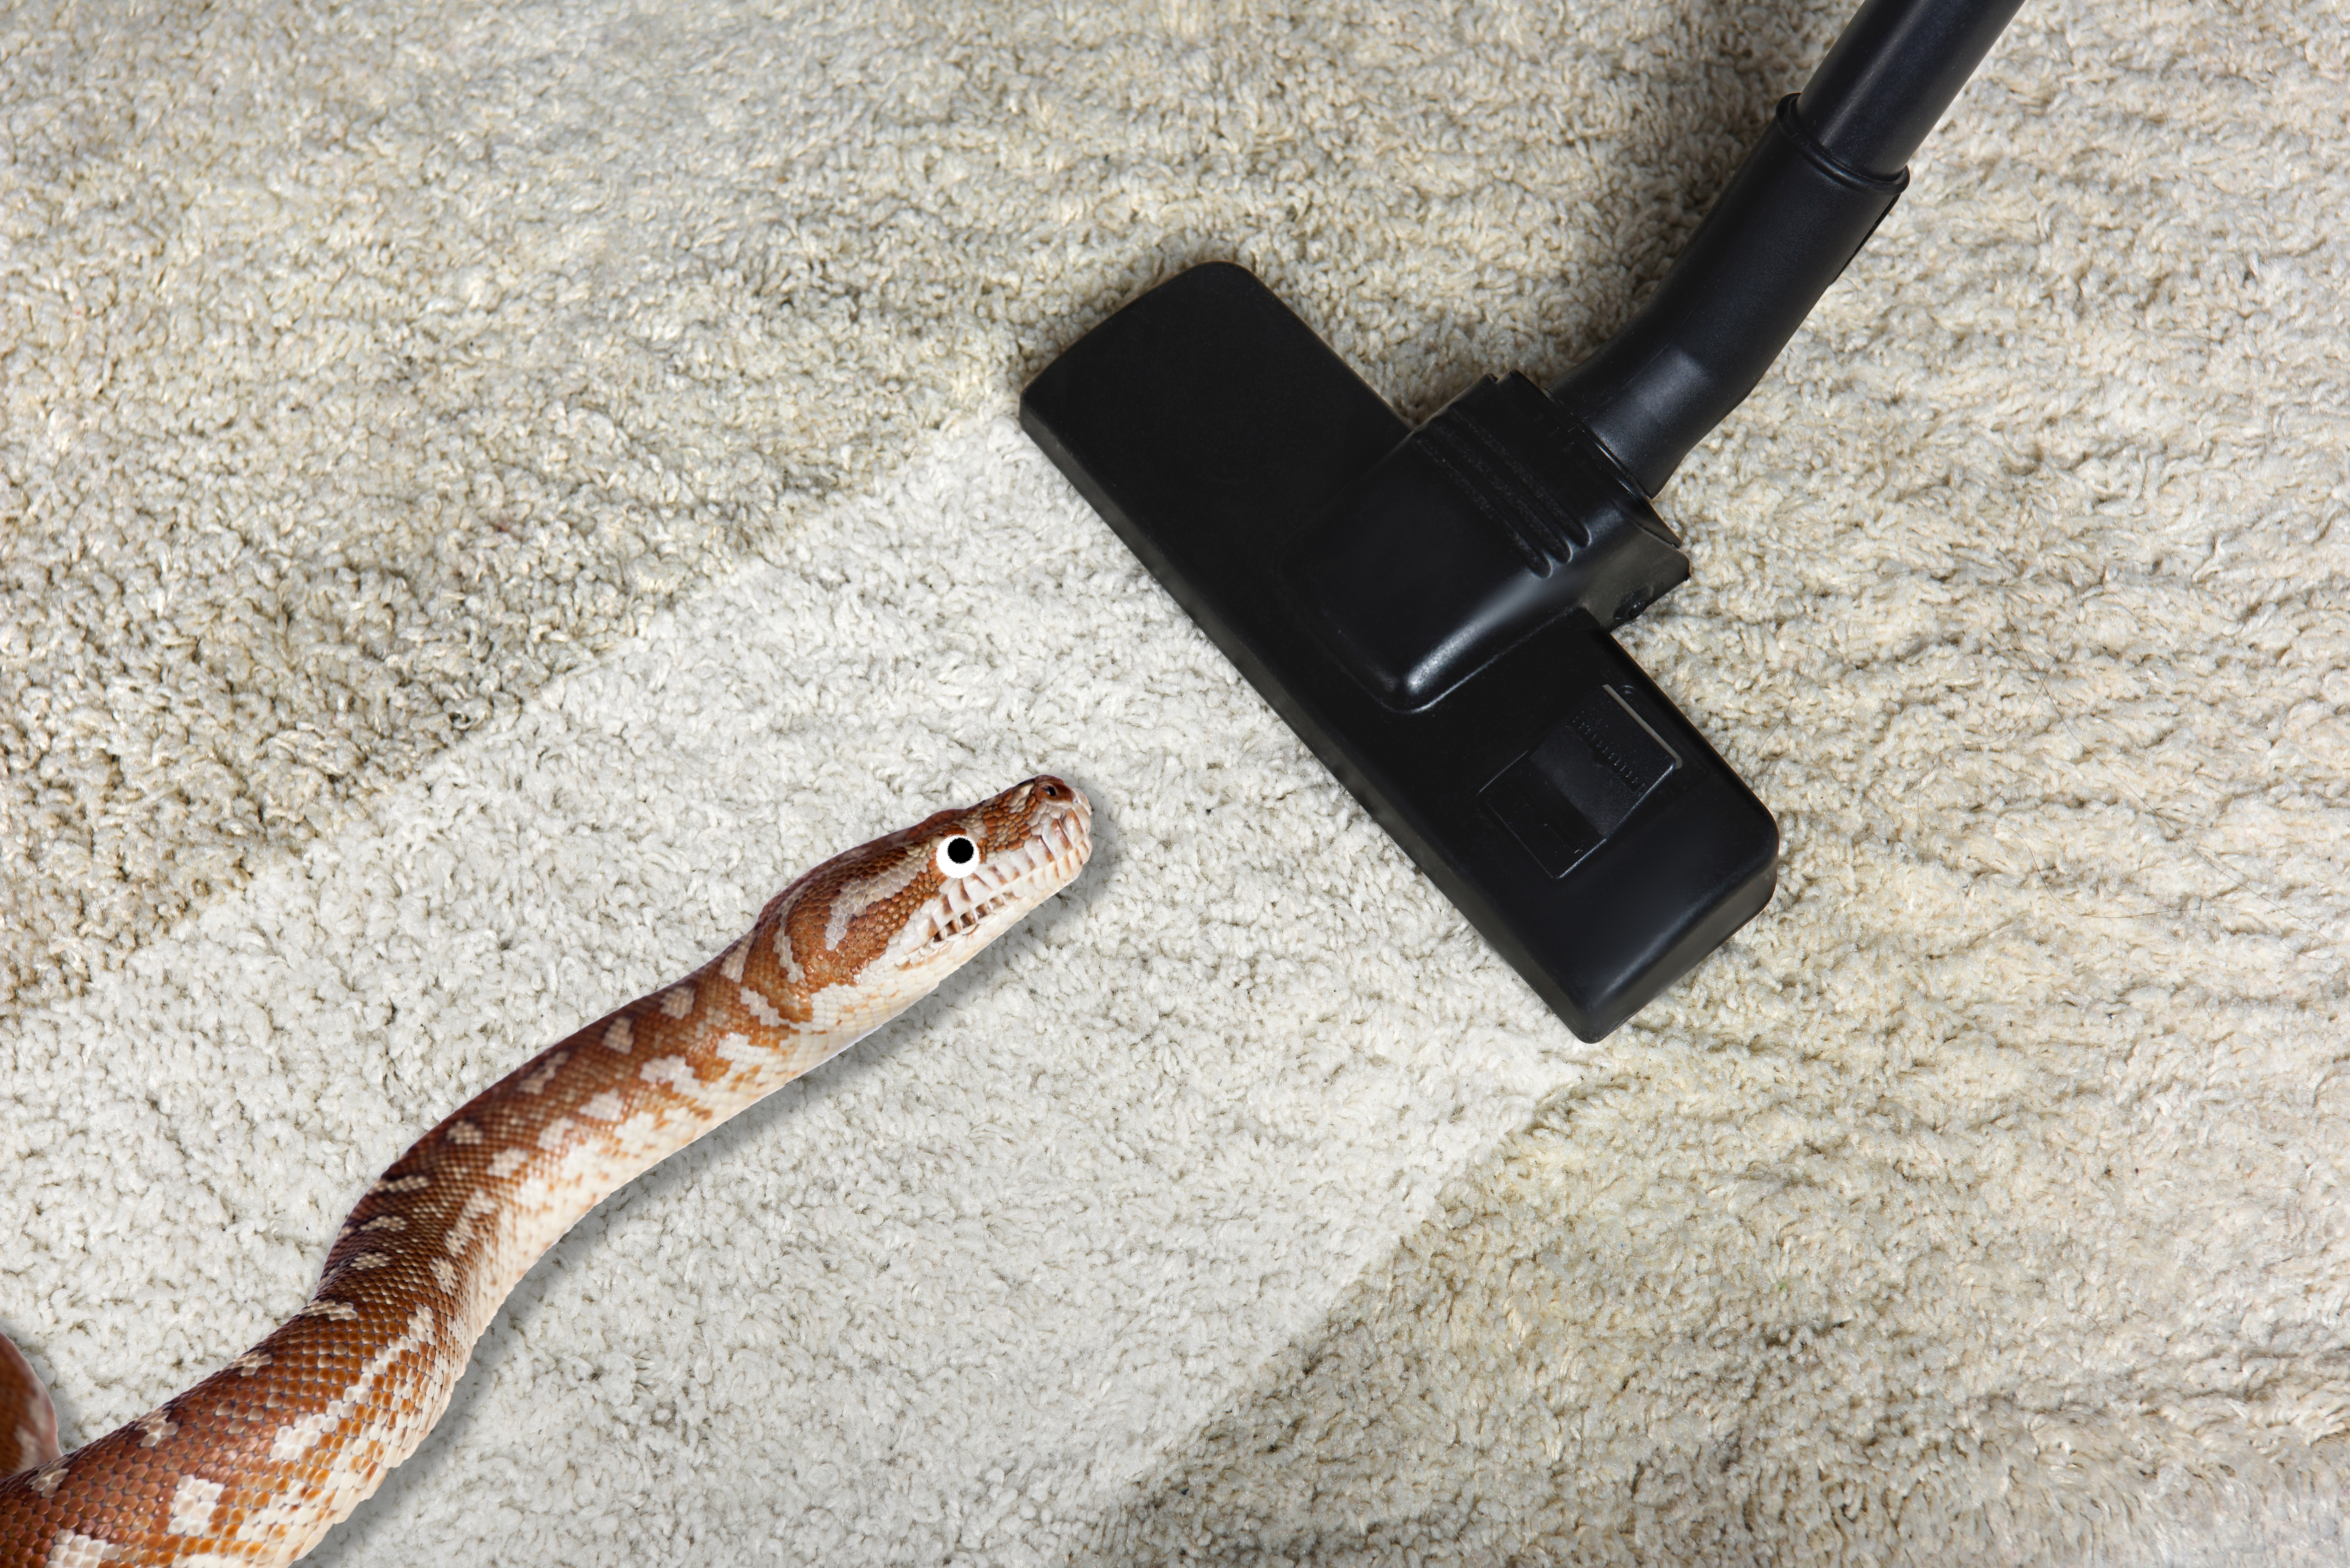 Carpet and snake